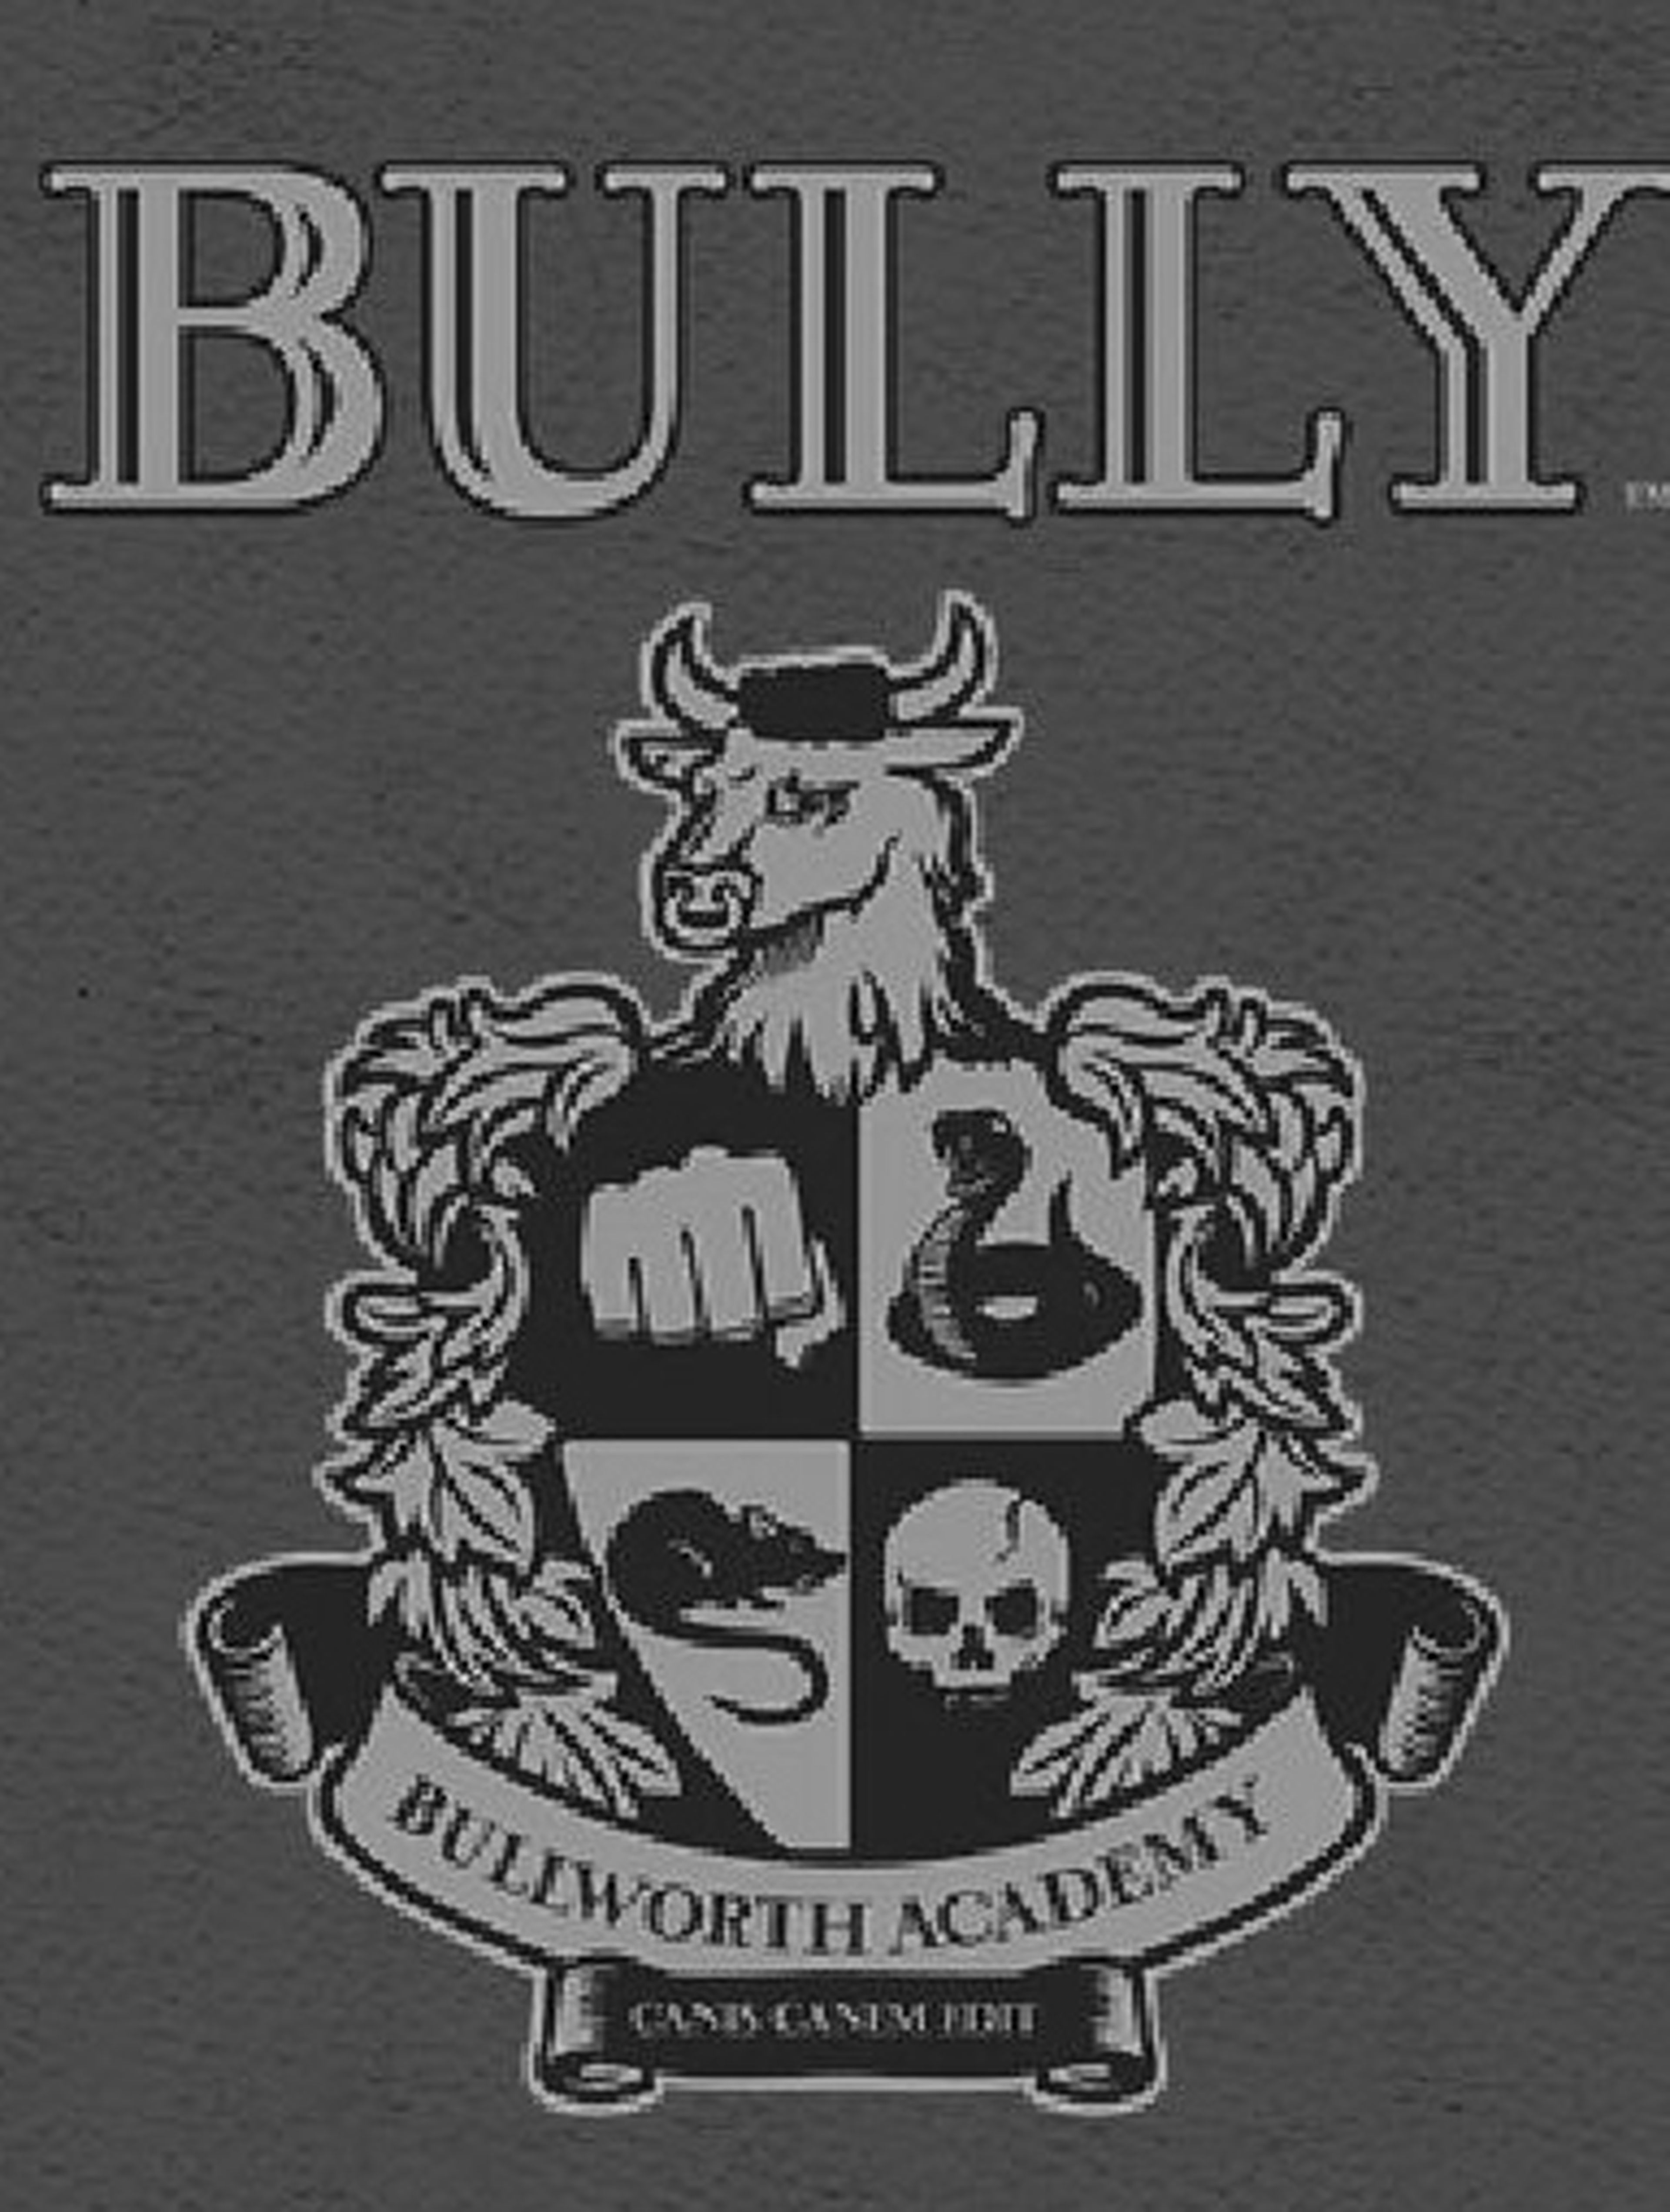 Bully Bullworth Academy Canis Canem registrado por Rockstar